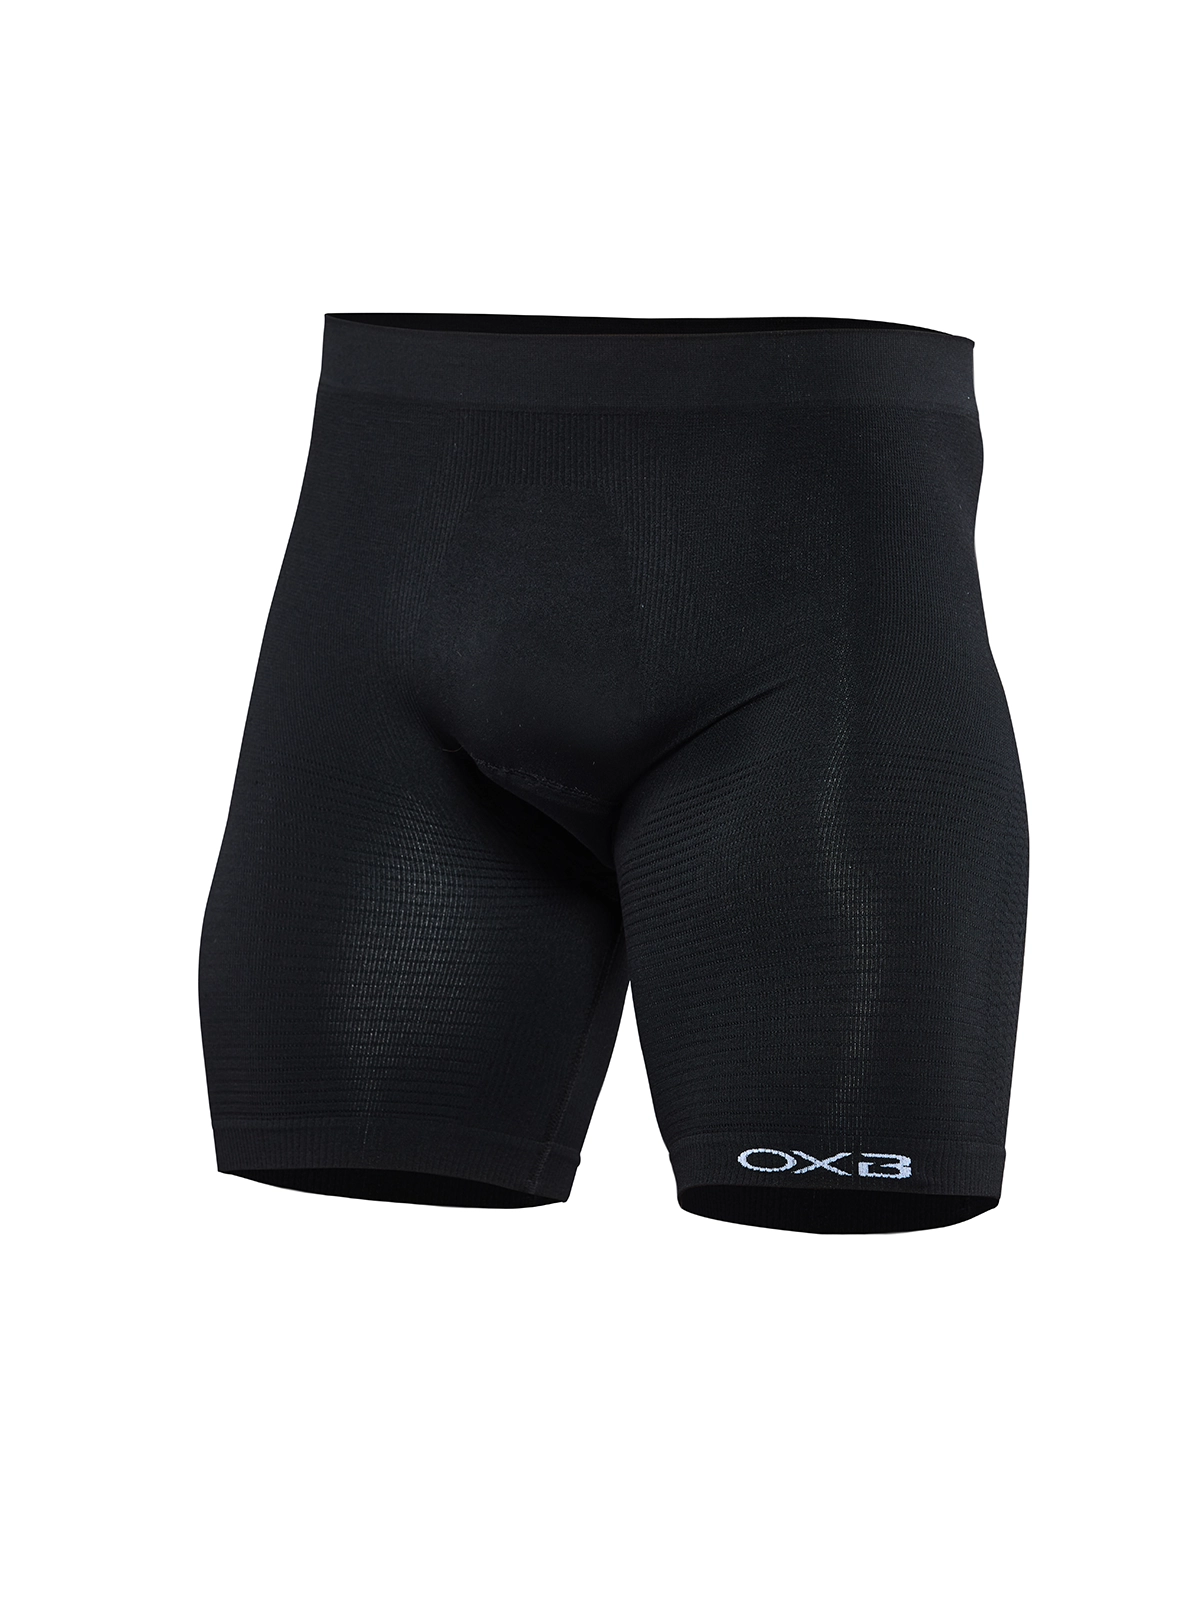 pantaloncino-shorts-pad-6027-bike-black-fronte